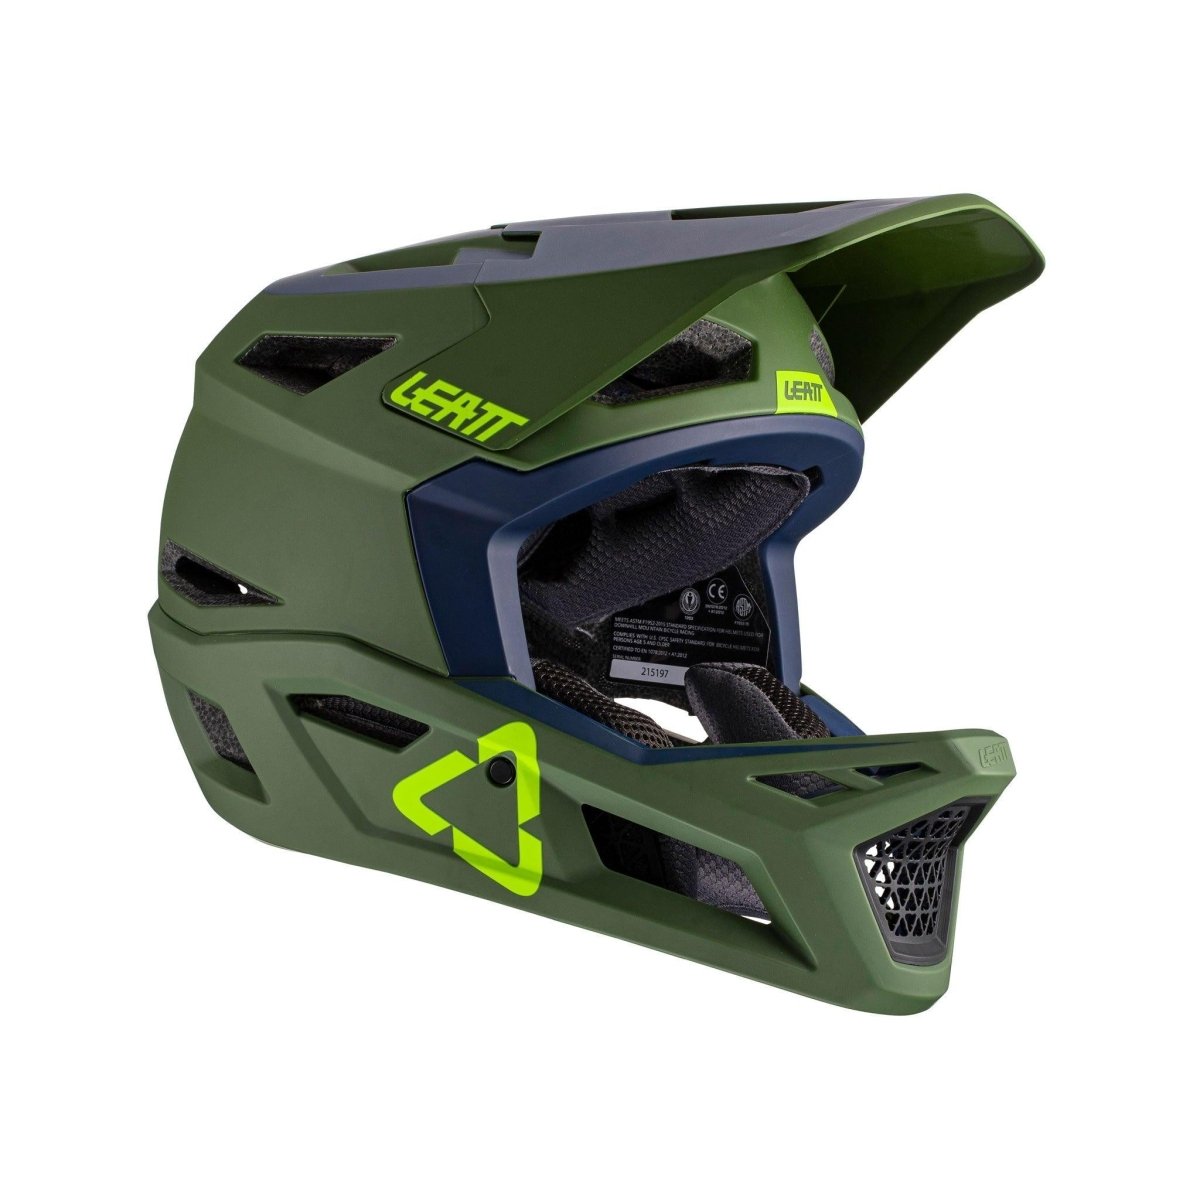 Leatt MTB 4.0 Enduro Helmet, Small (55-56cm), Cactus Green - Alaska Bicycle Center